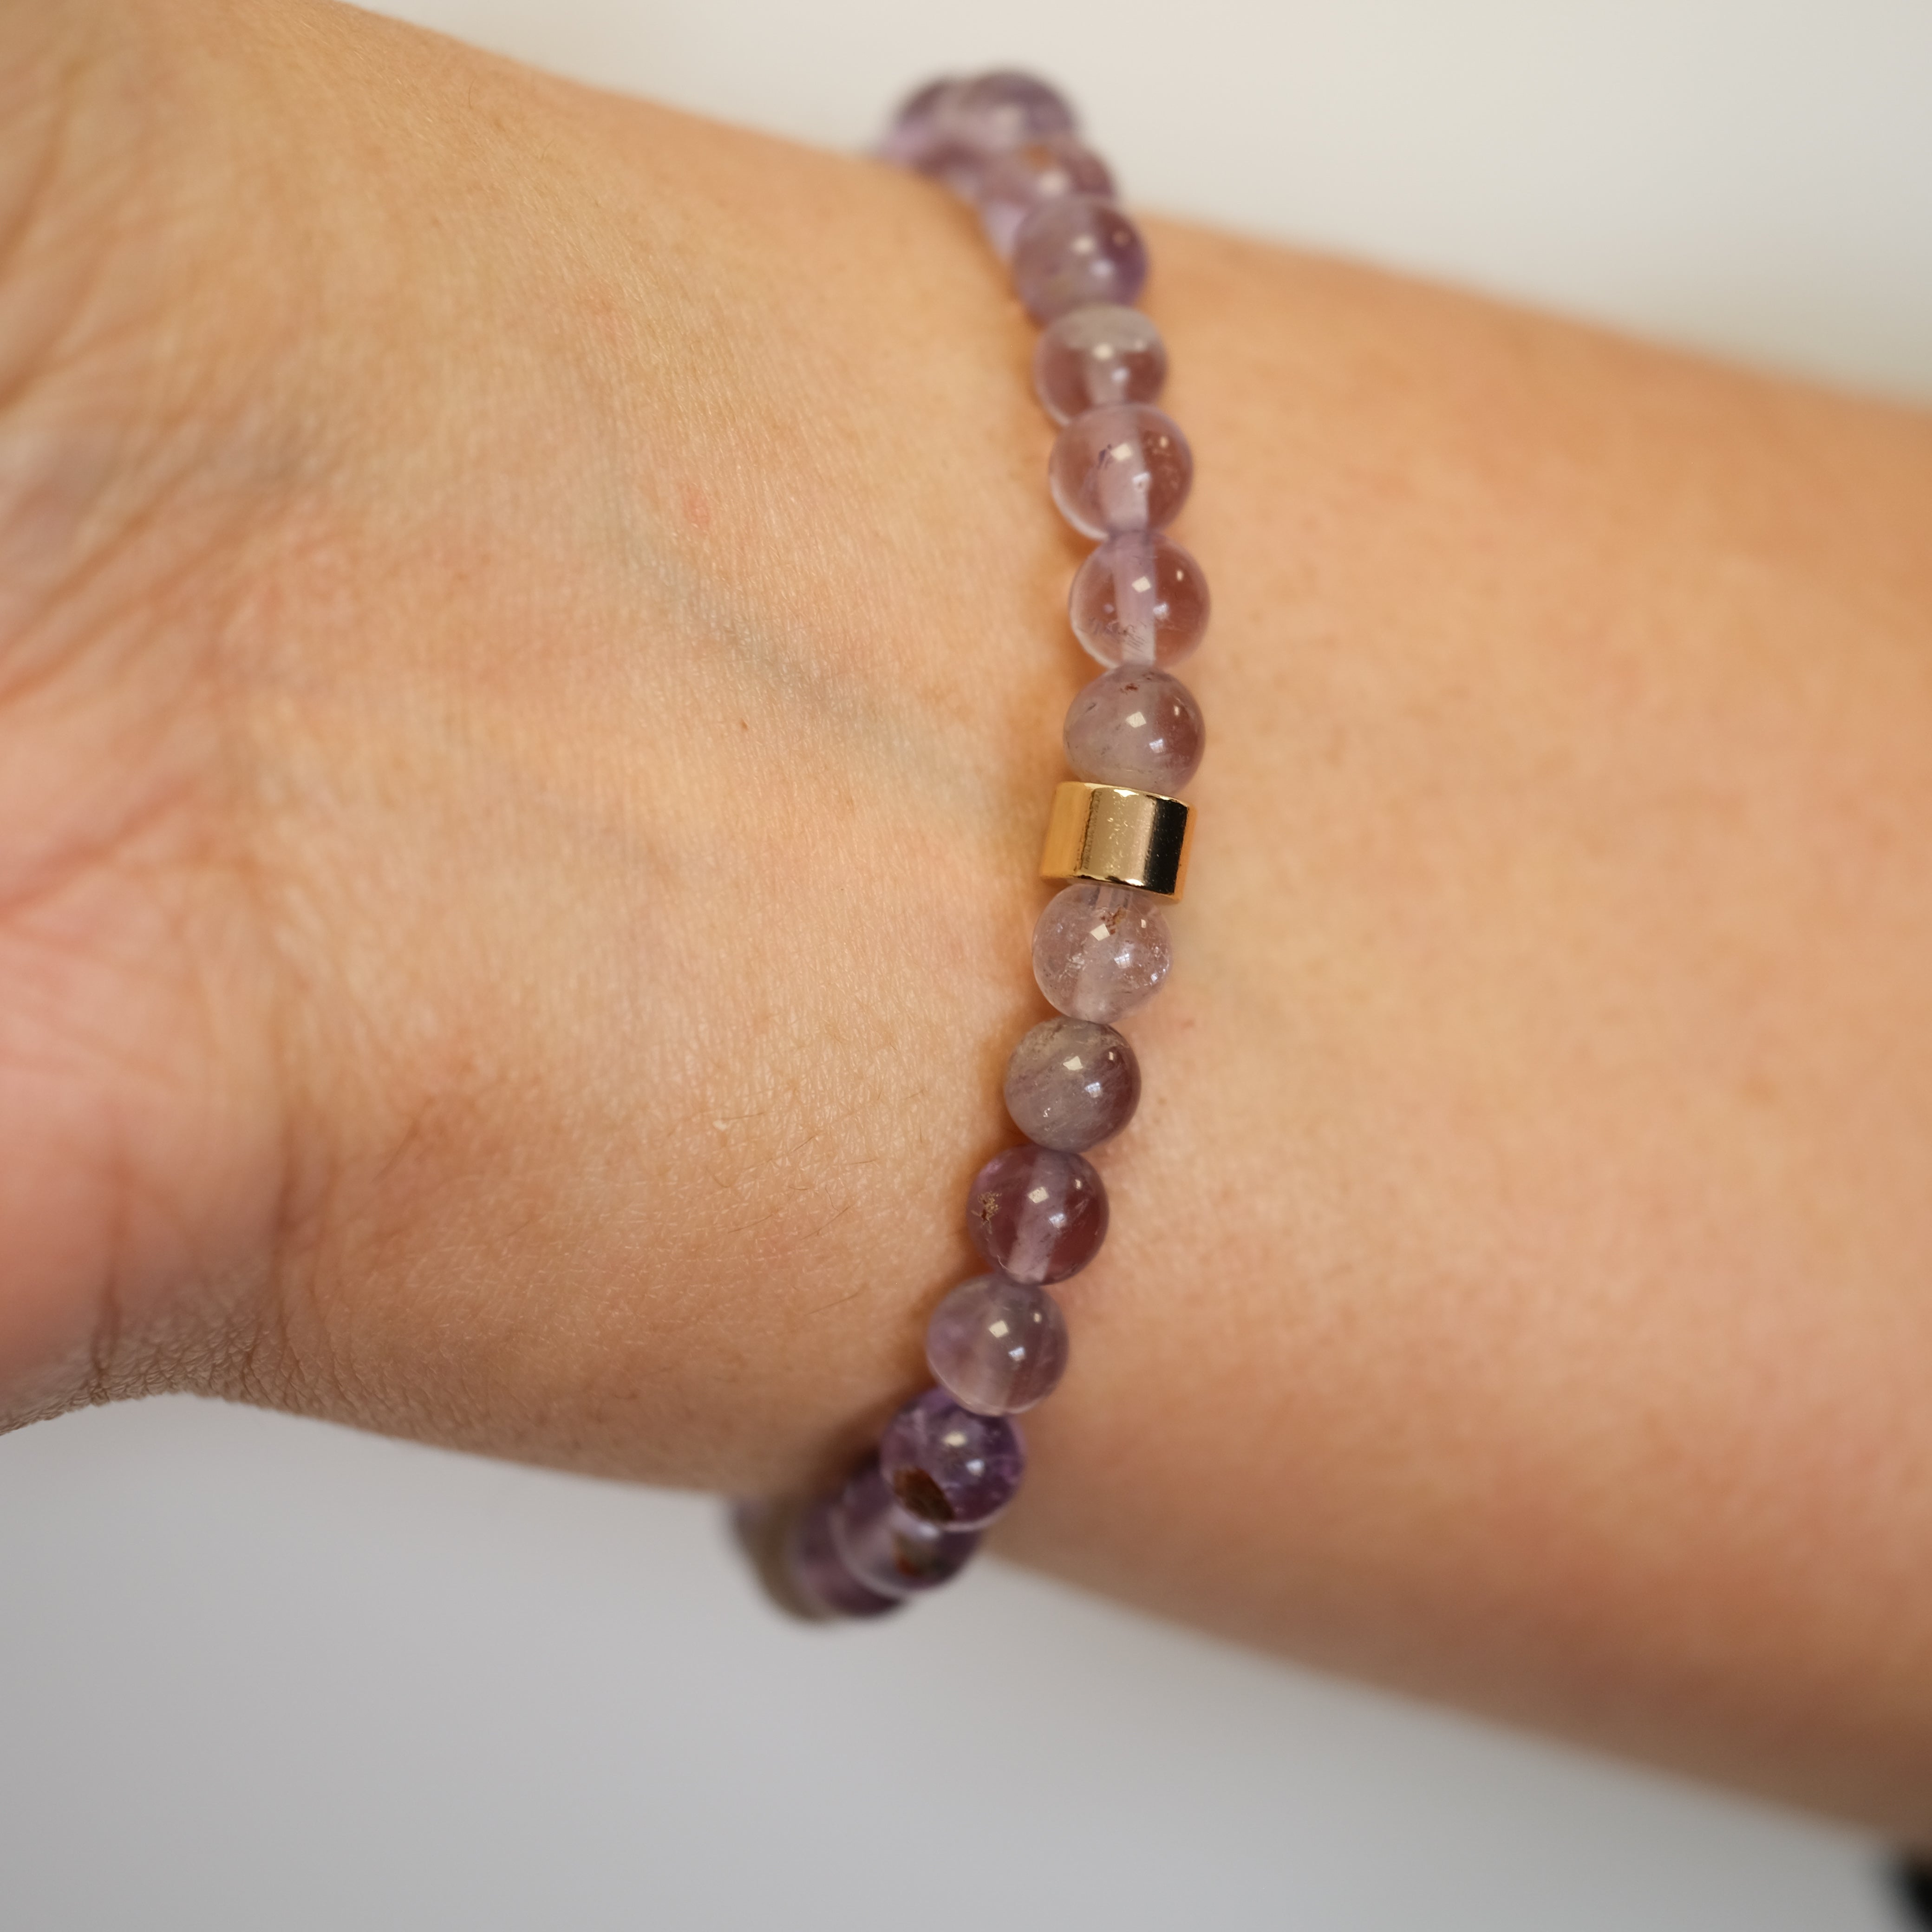 A phantom amethyst gemstone bracelet in 6mm beads worn on a model's wrist from behind